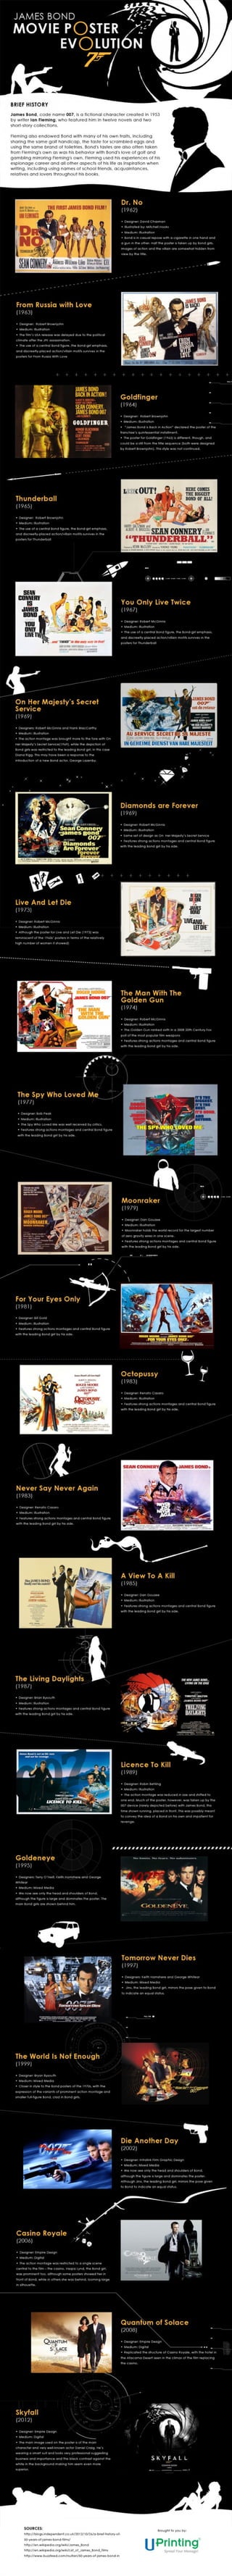 James bond-movie-poster-evolution-infographic